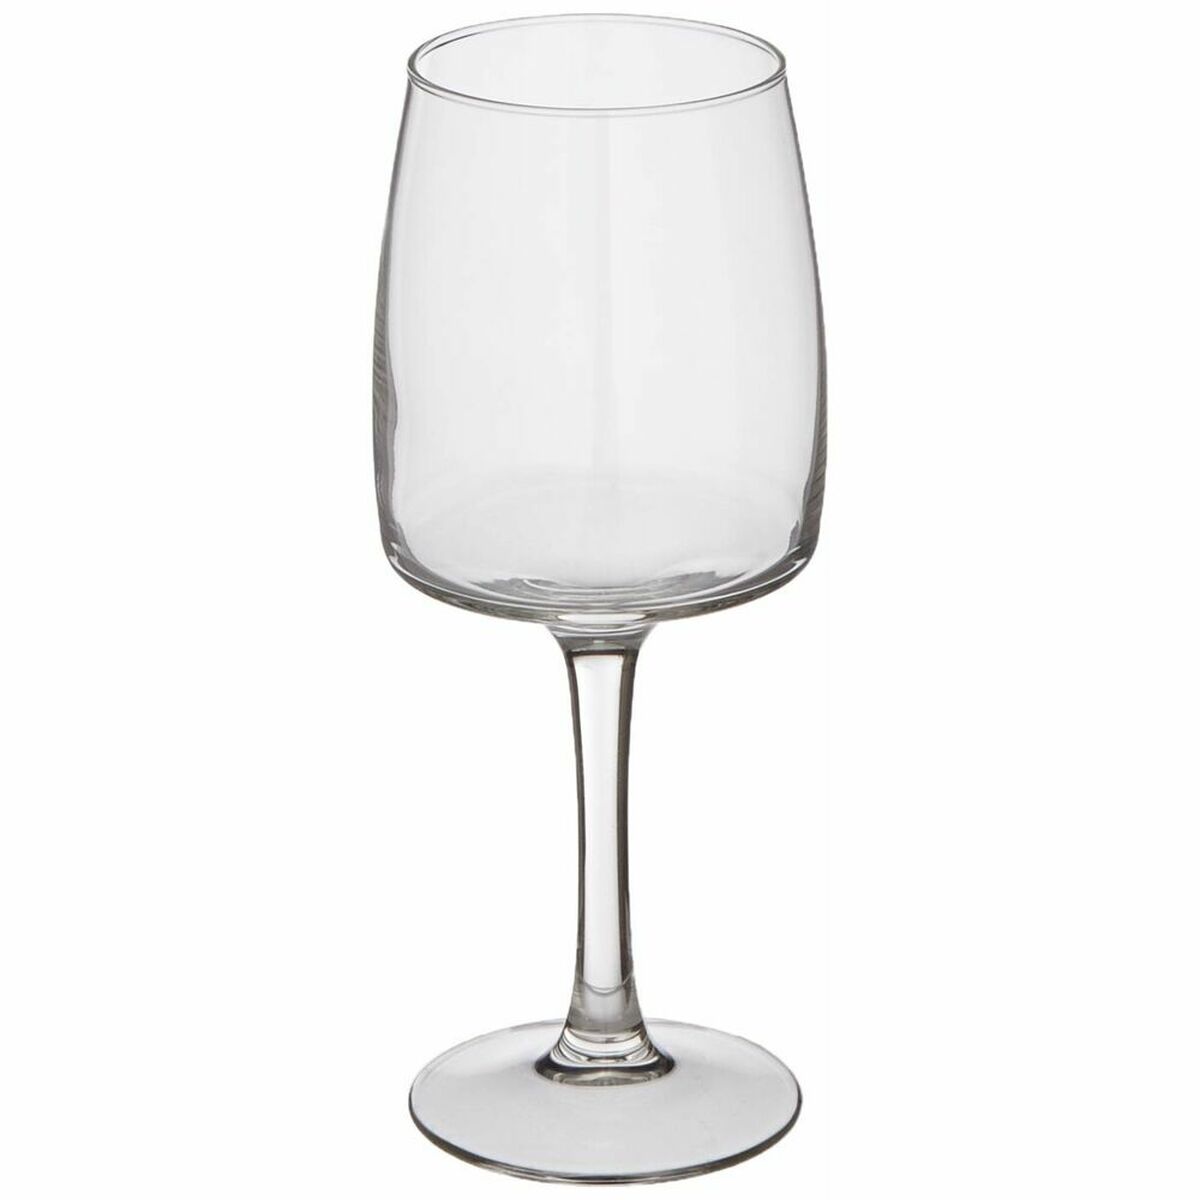 verre de vin Luminarc Equip Home Transparent verre (35 cl)